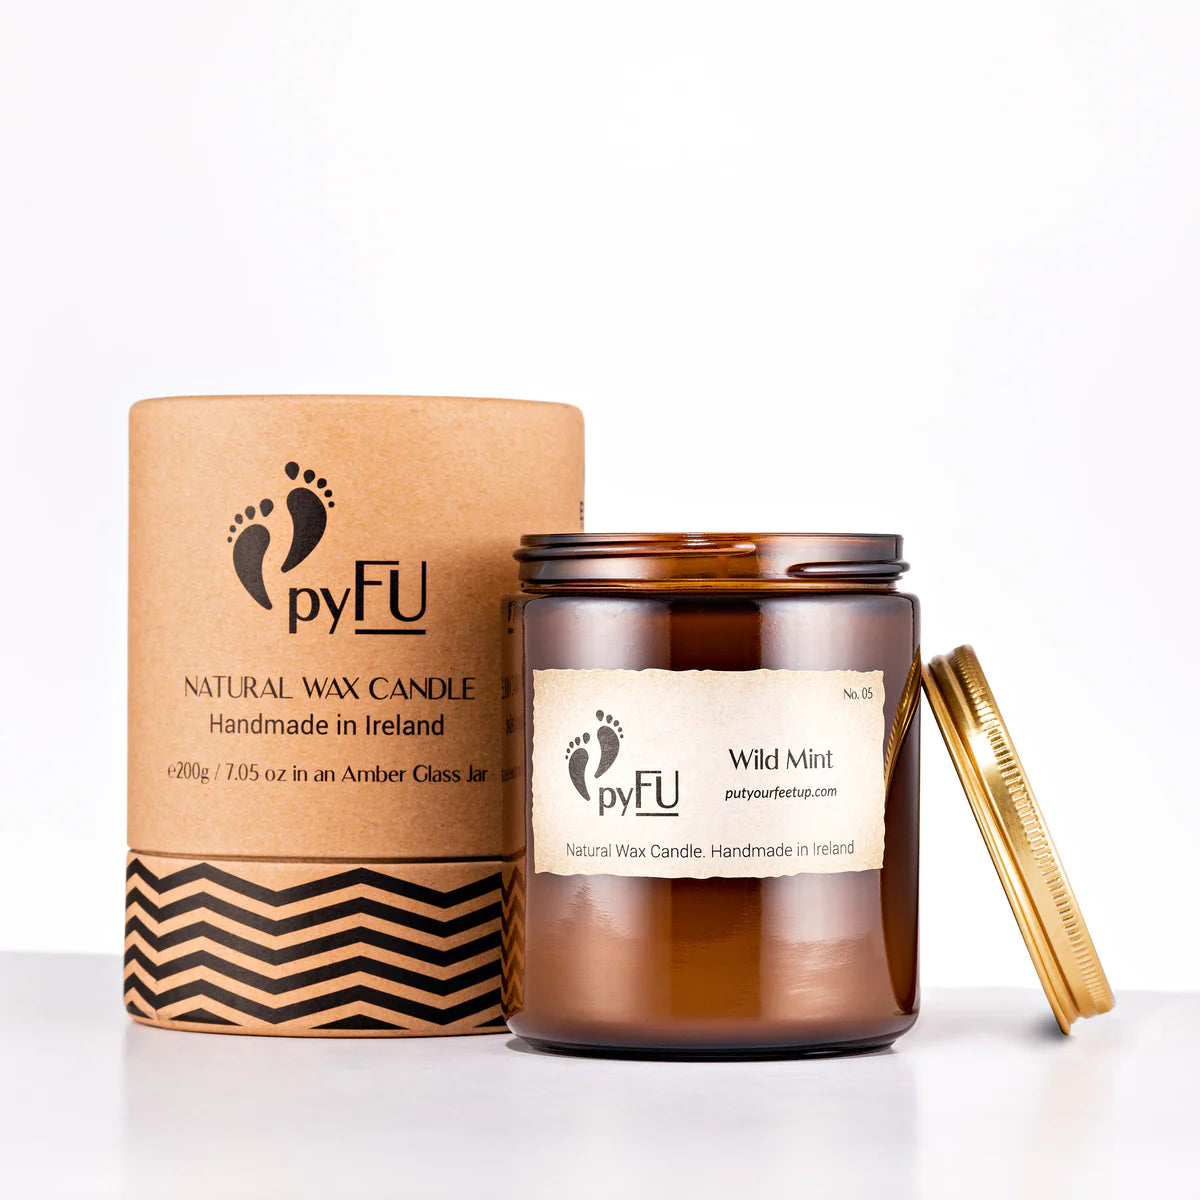 pyFU 200g Natural Wax Candle - Wild Mint